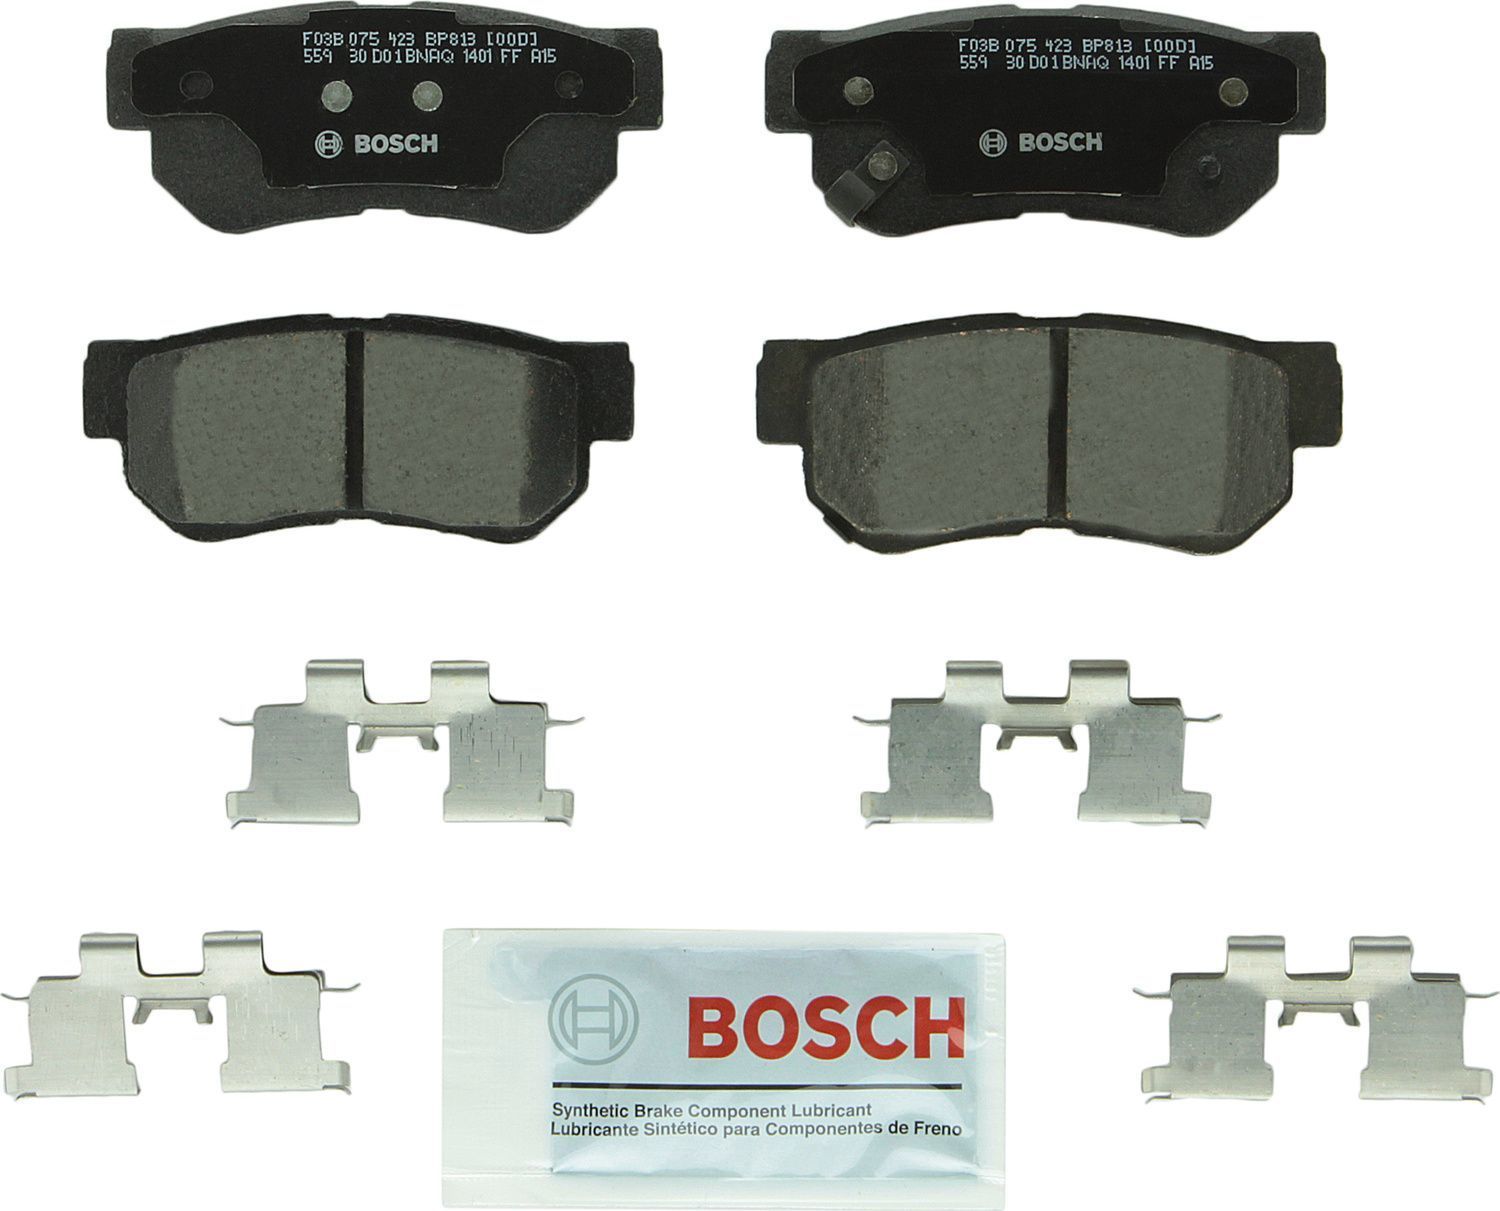 BOSCH BRAKE - Bosch QuietCast Brake Pad Ceramic Brake Pads (Rear) - BQC BP813